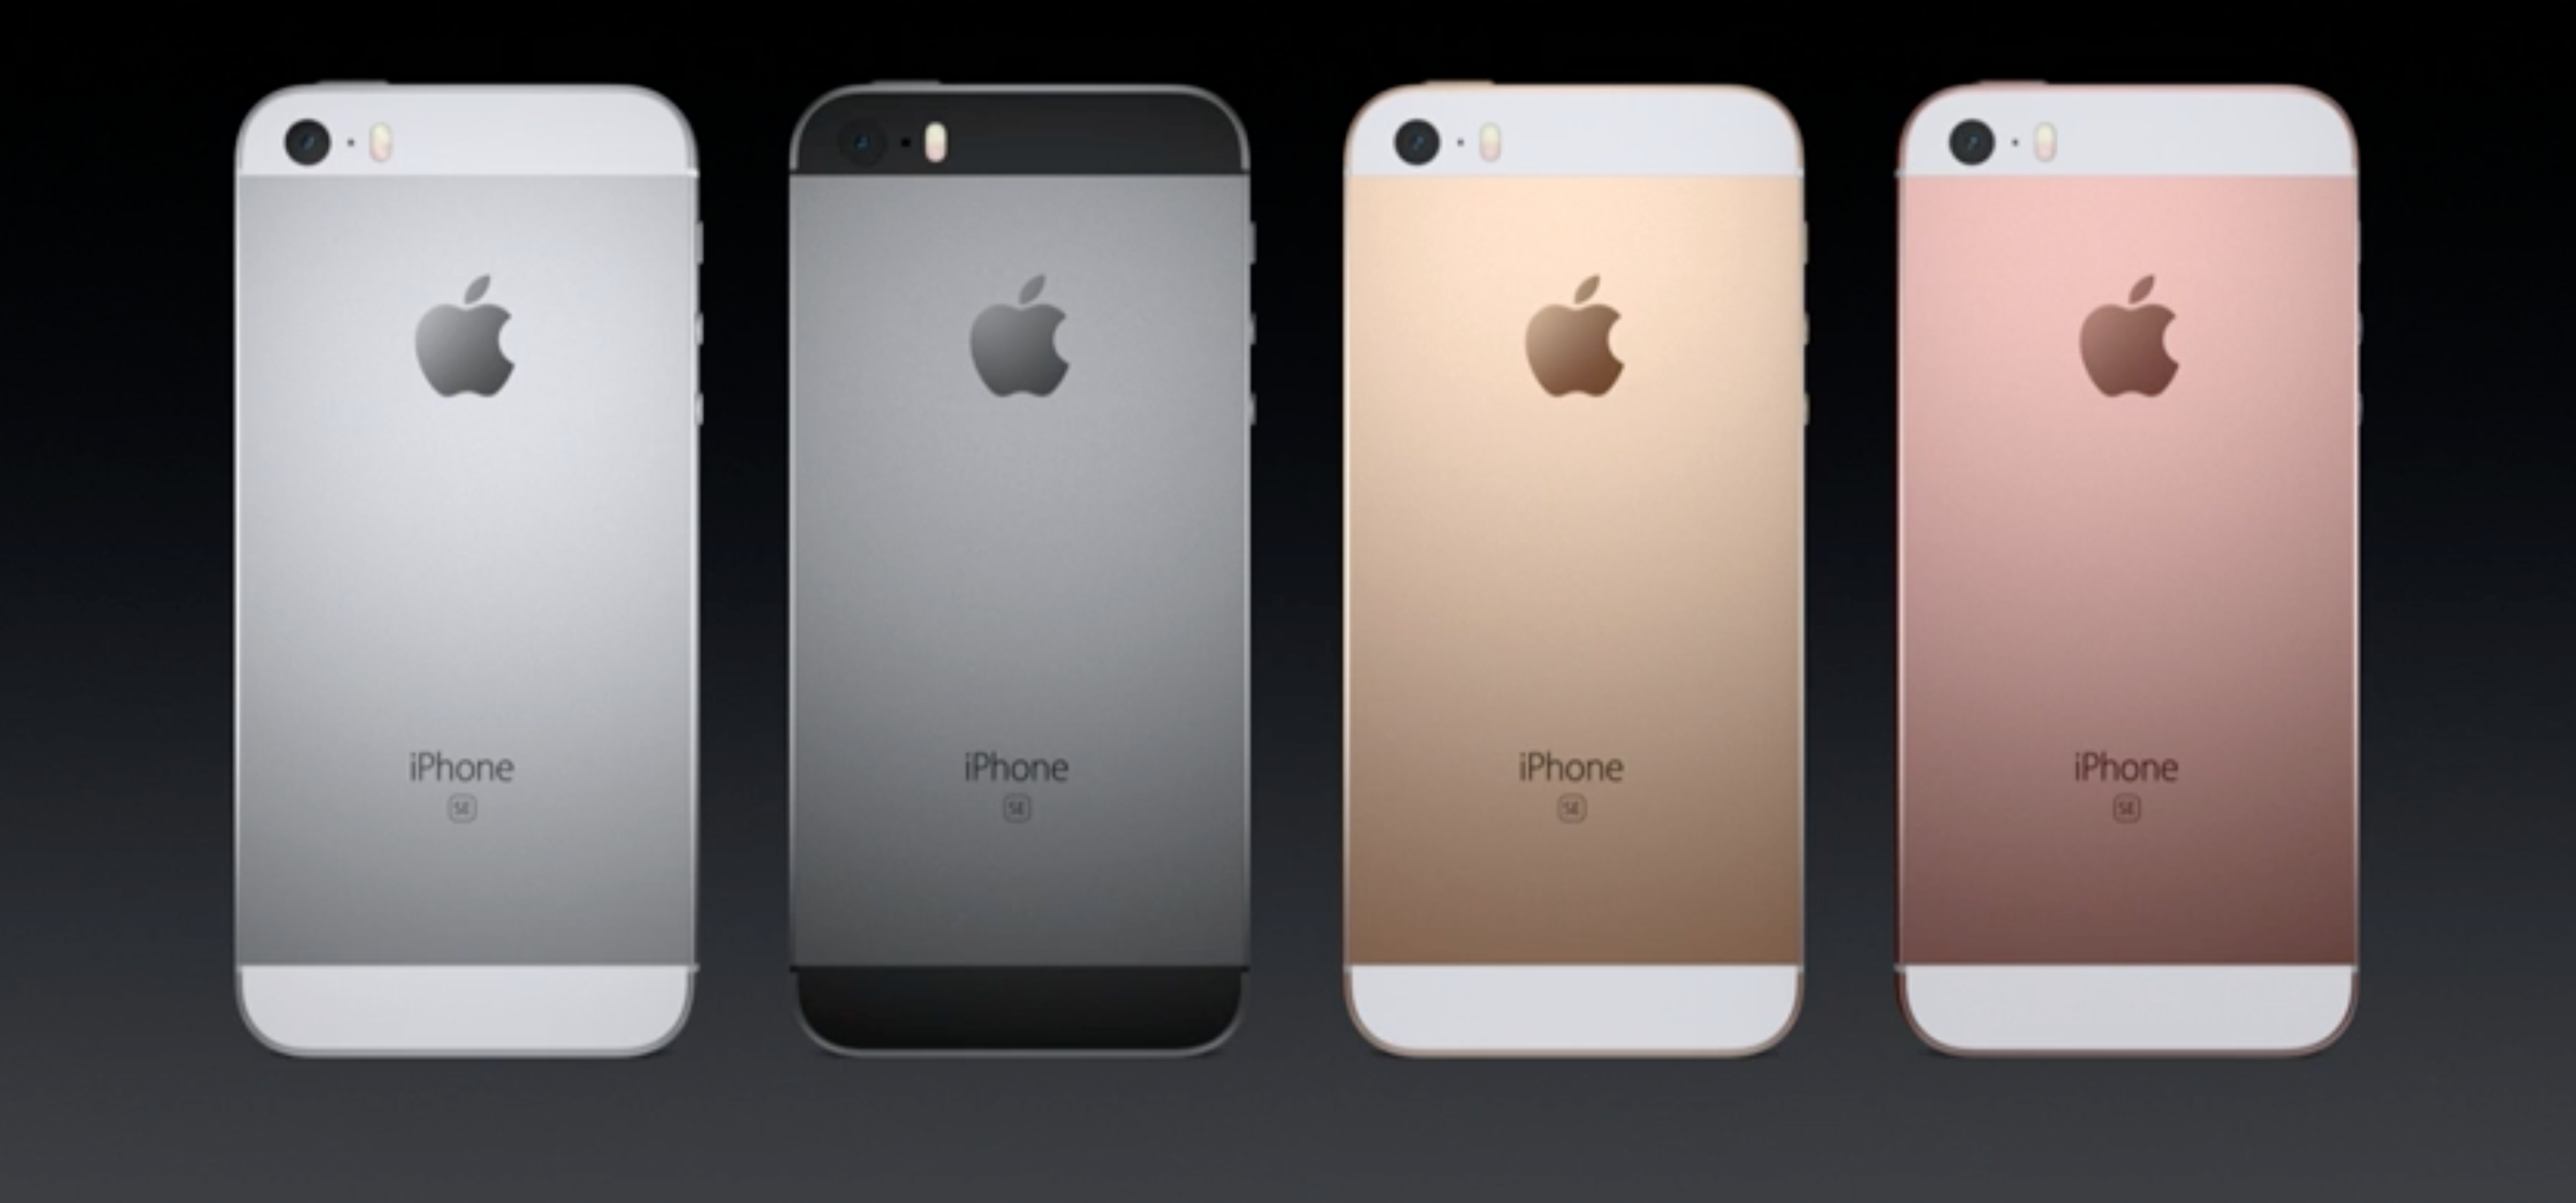 iPhone SE får samme design som iPhone 5S, dog med noen nye farger.